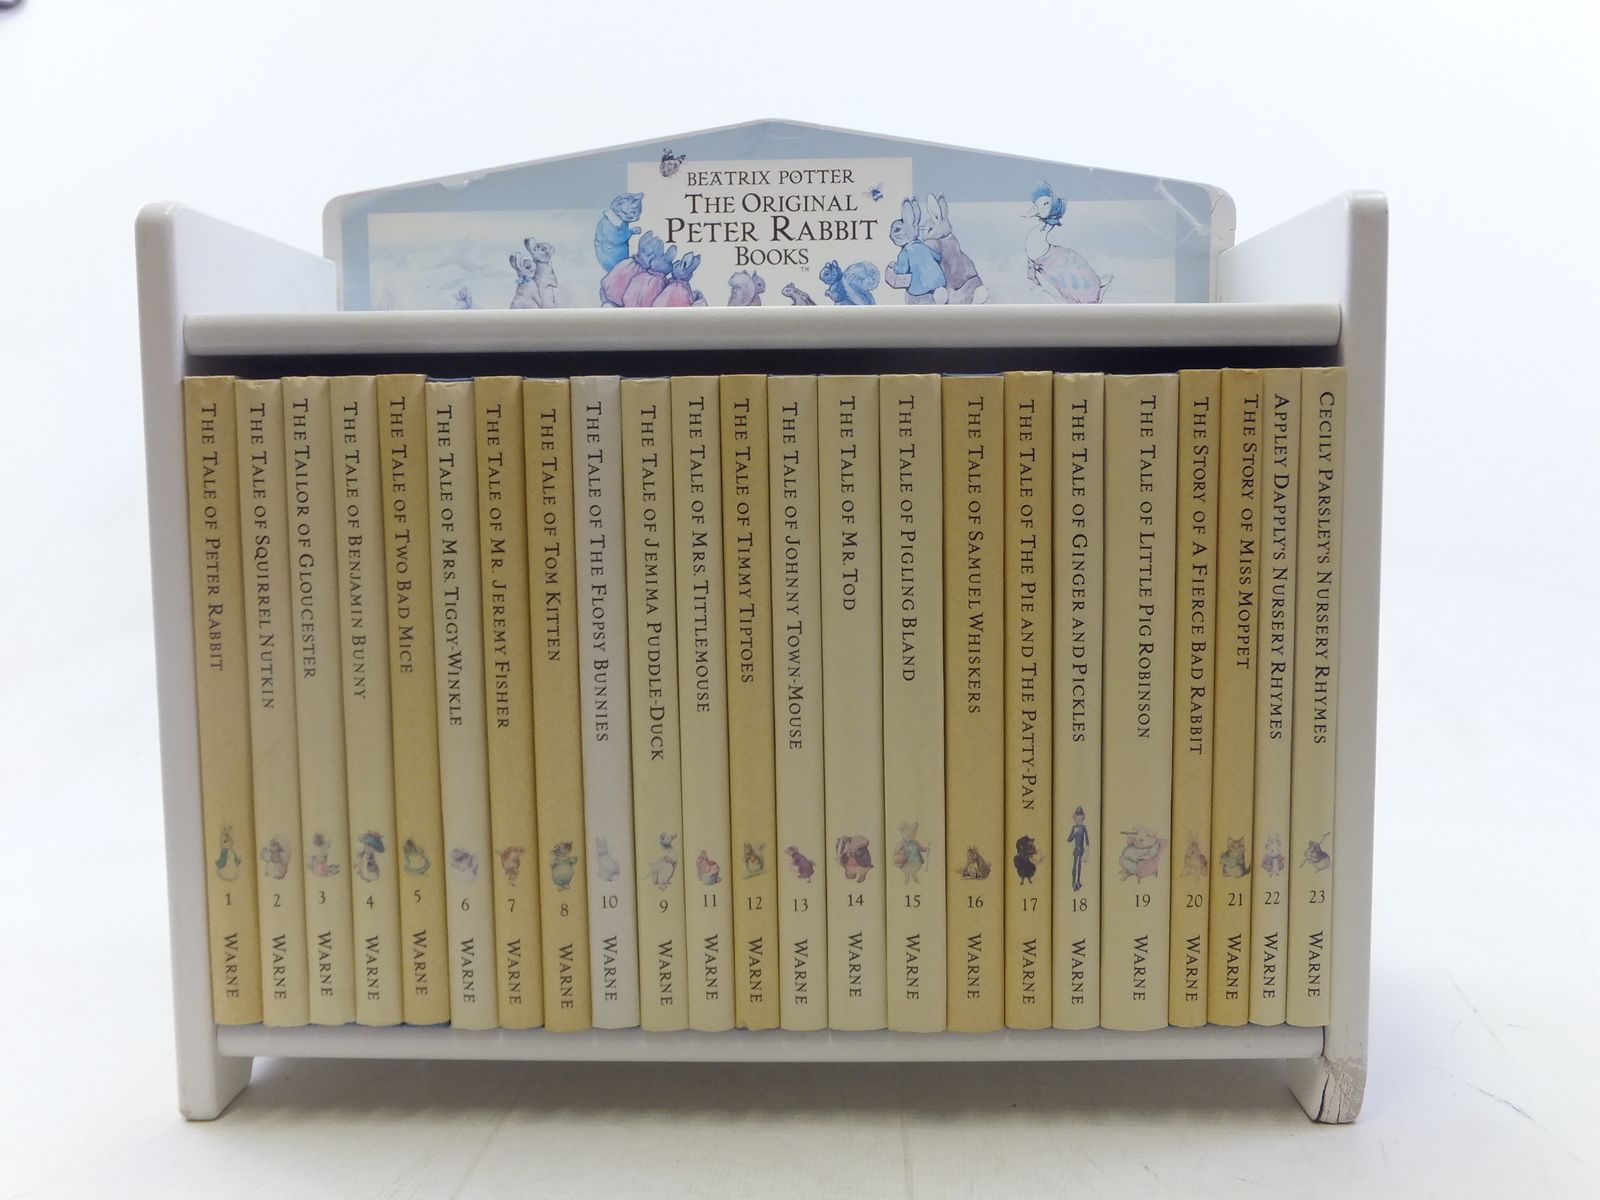 Stella Rose S Books The Original Peter Rabbit Books Complete